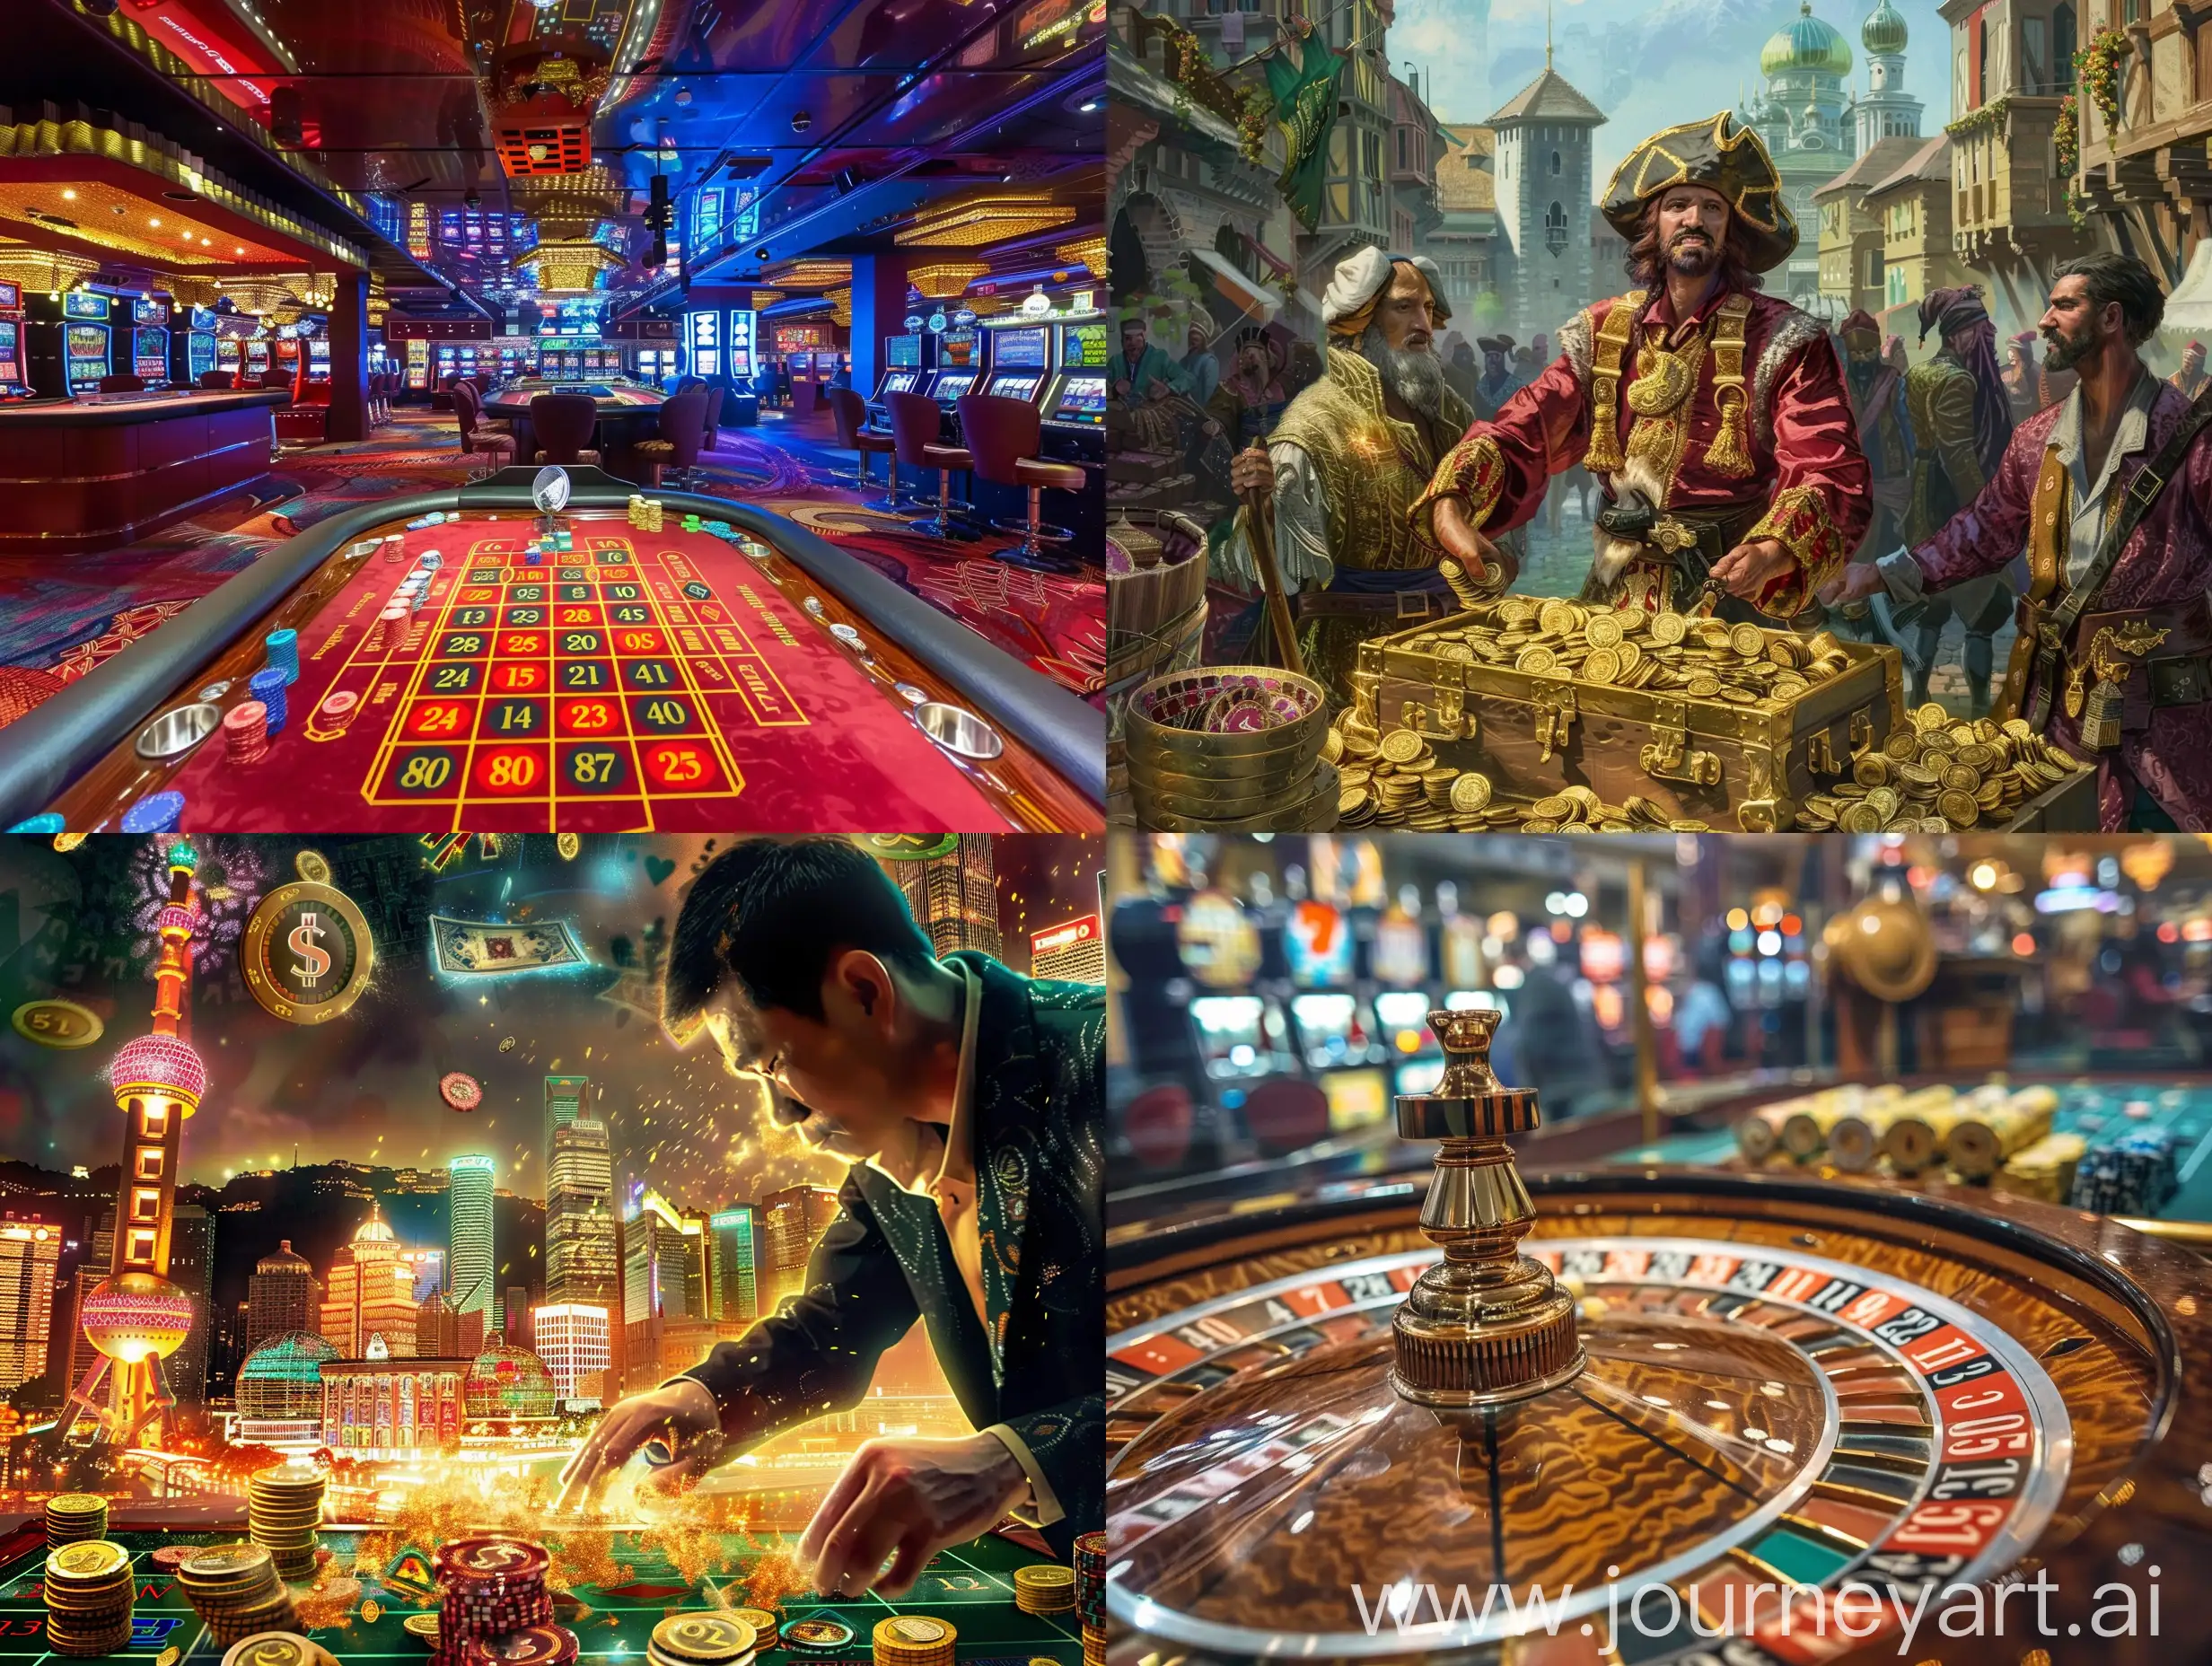 Exciting-Casino-Dealer-Winning-Big-Money-Entertainment-City-Scene